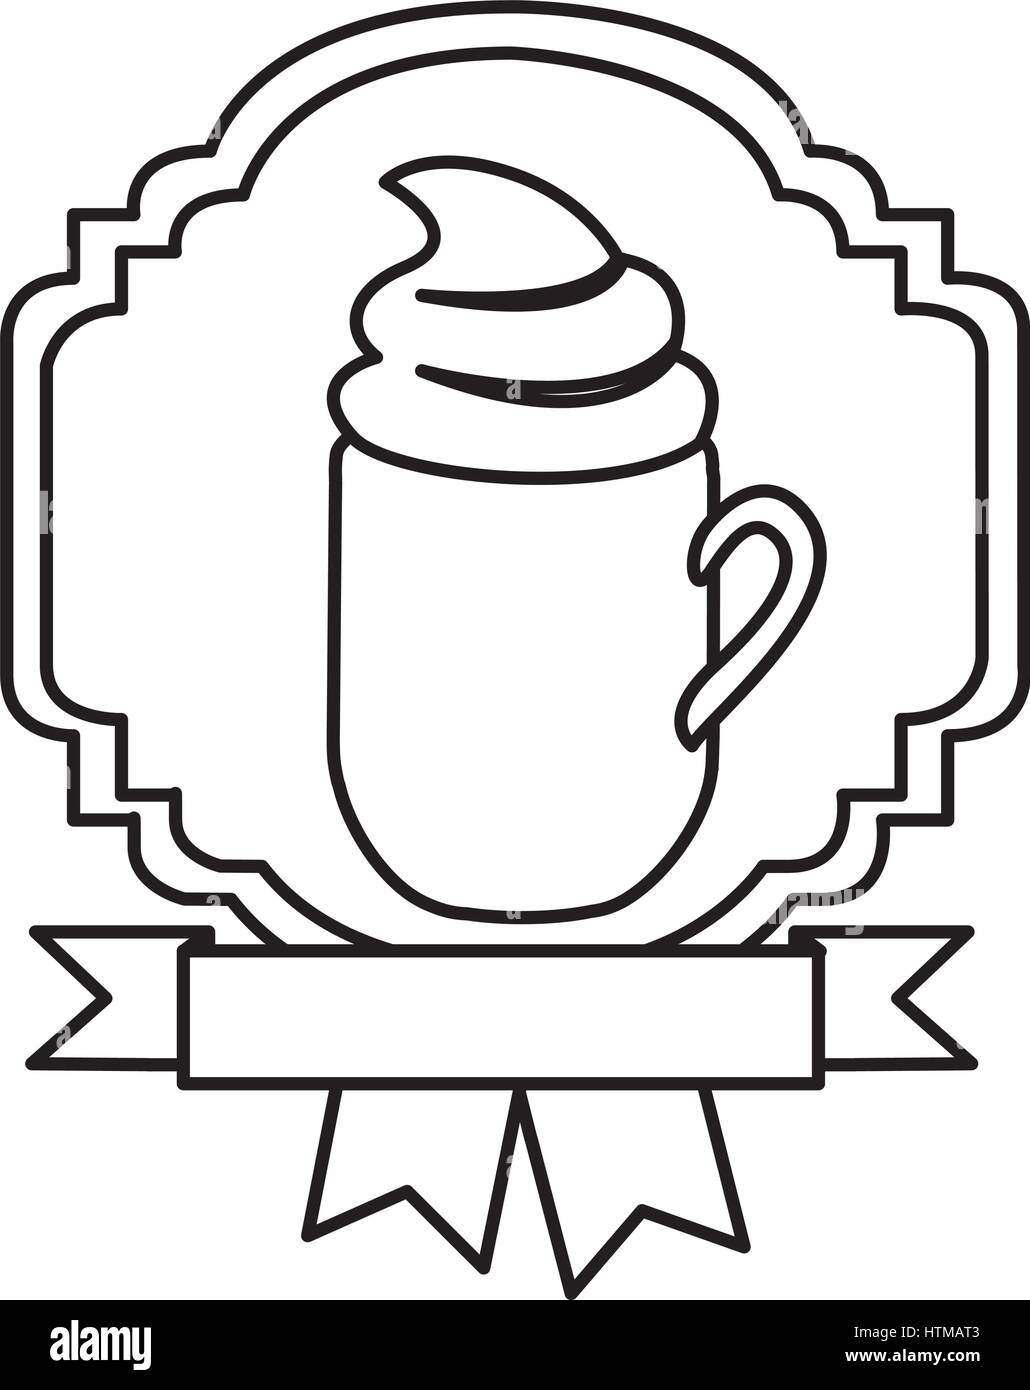 silhouette border heraldic decorative ribbon with mug of cappuccino with cream Stock Vector